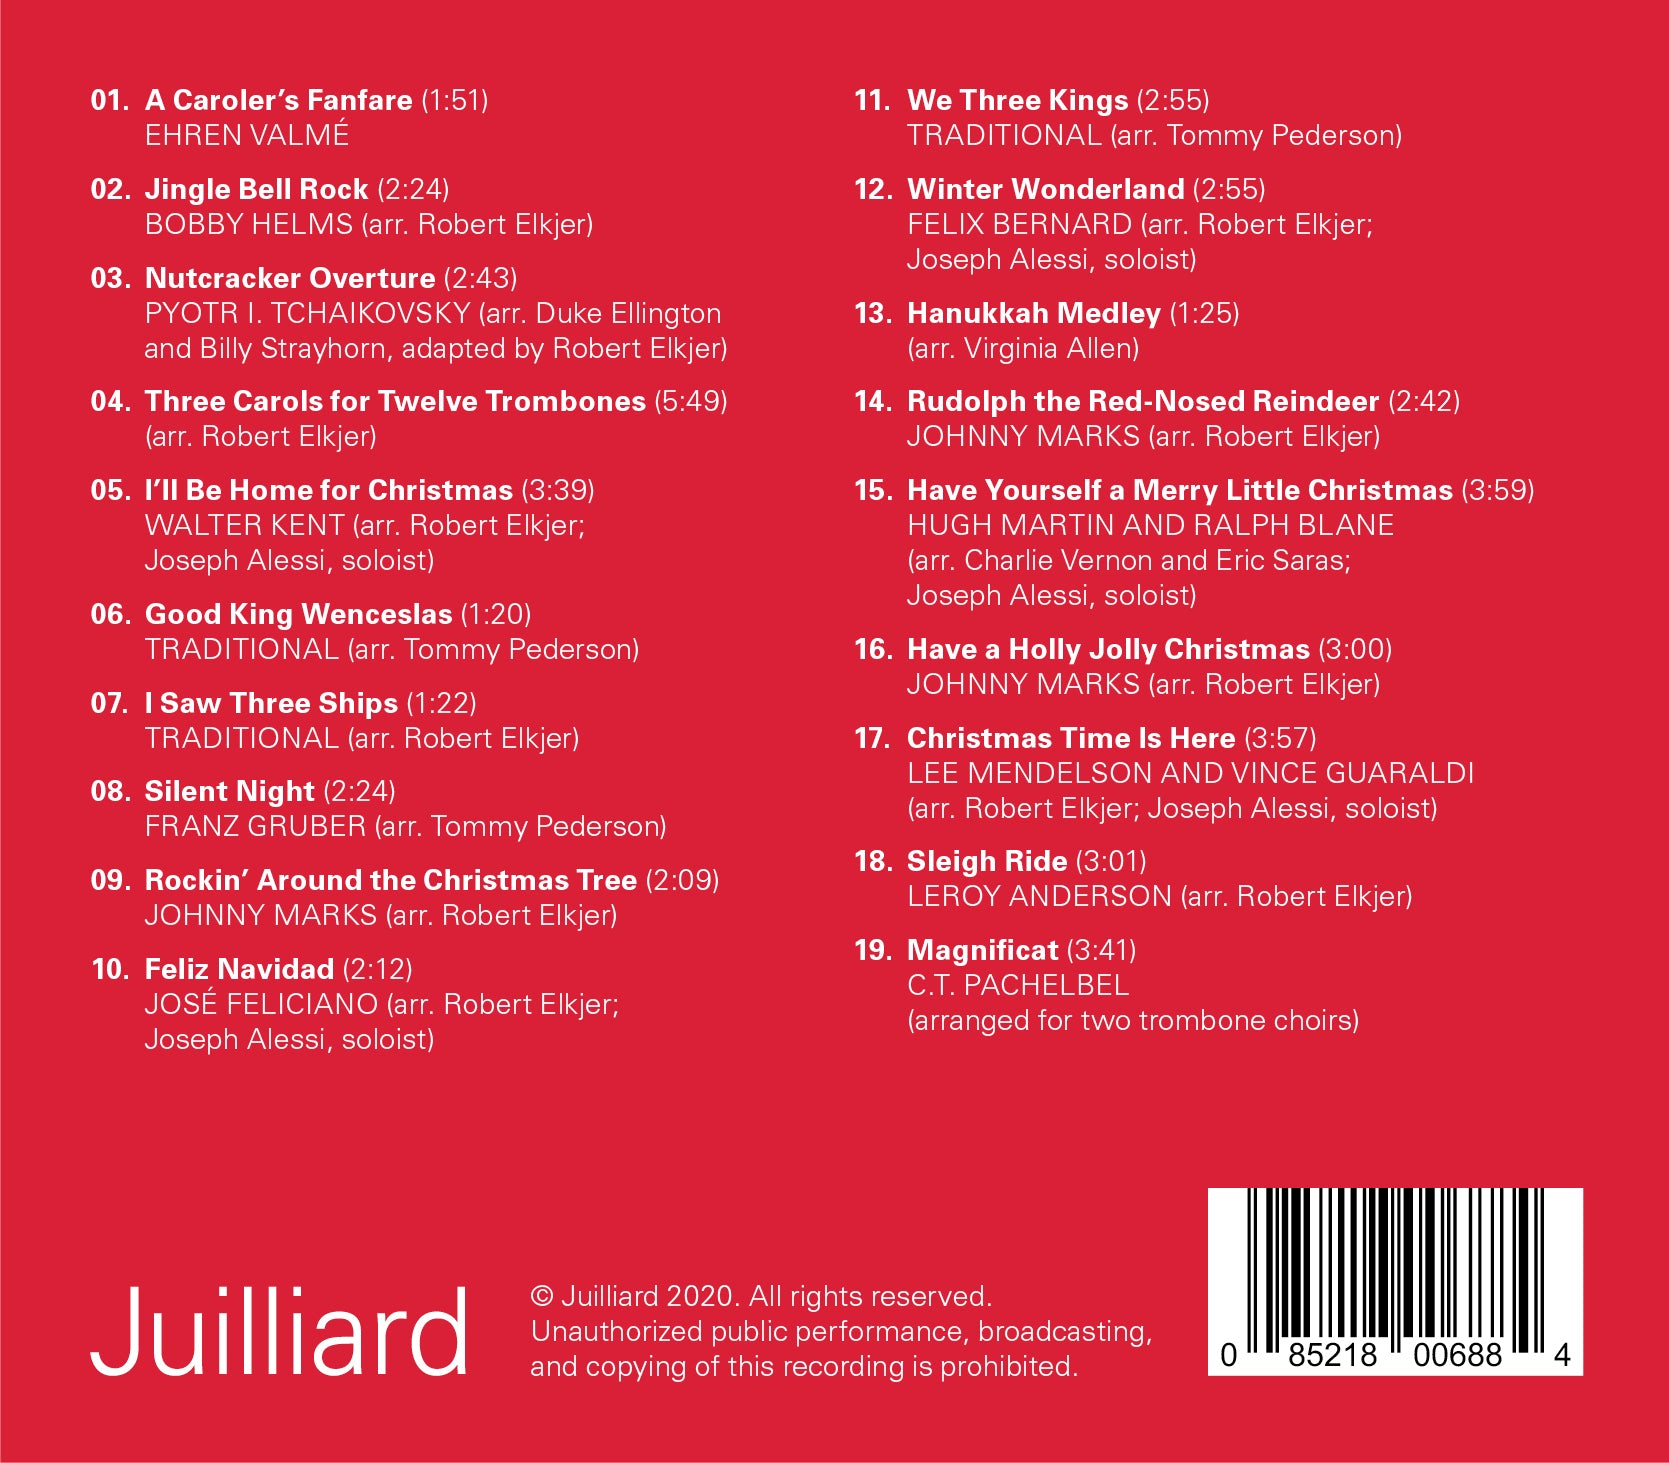 CD: The Juilliard Trombone Choir Holiday Classics FINAL SALE / CLEARANCE